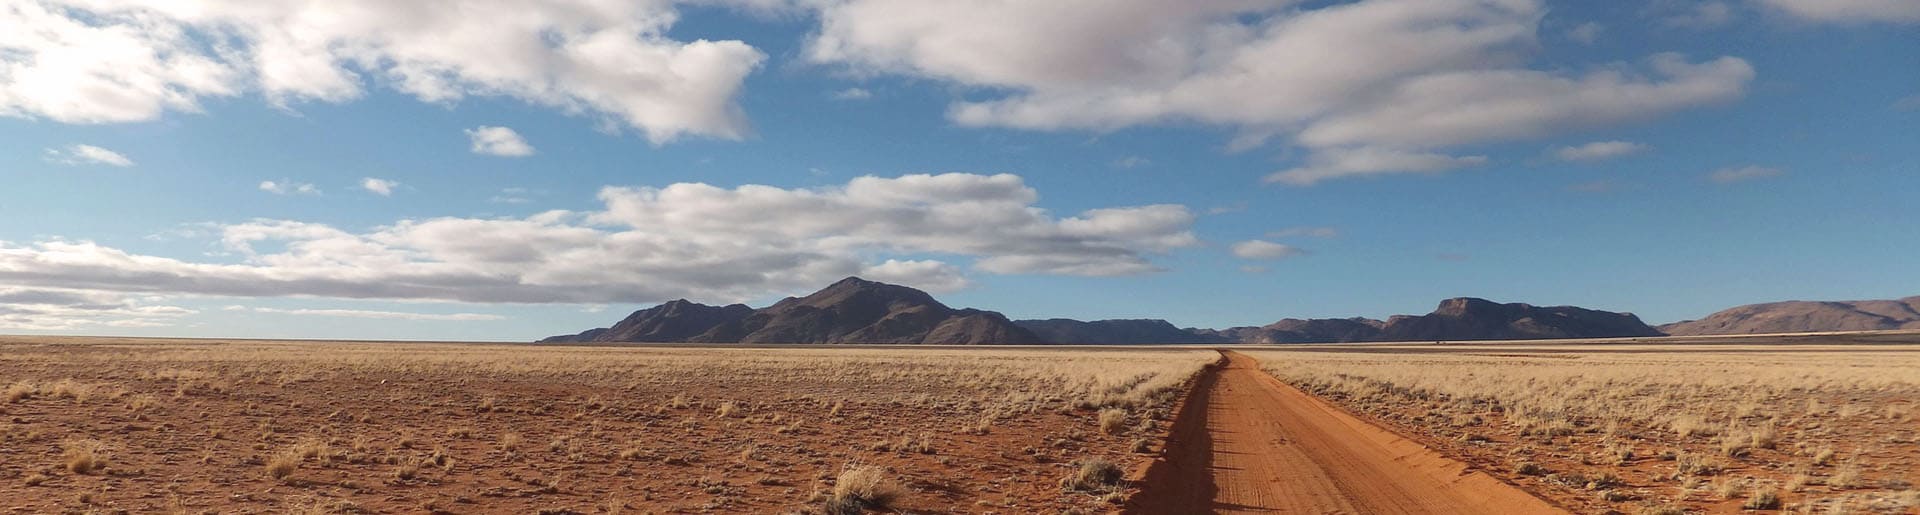 Namibia Selbstfahrer Straße, Mietwagenrundreise durch Namibia